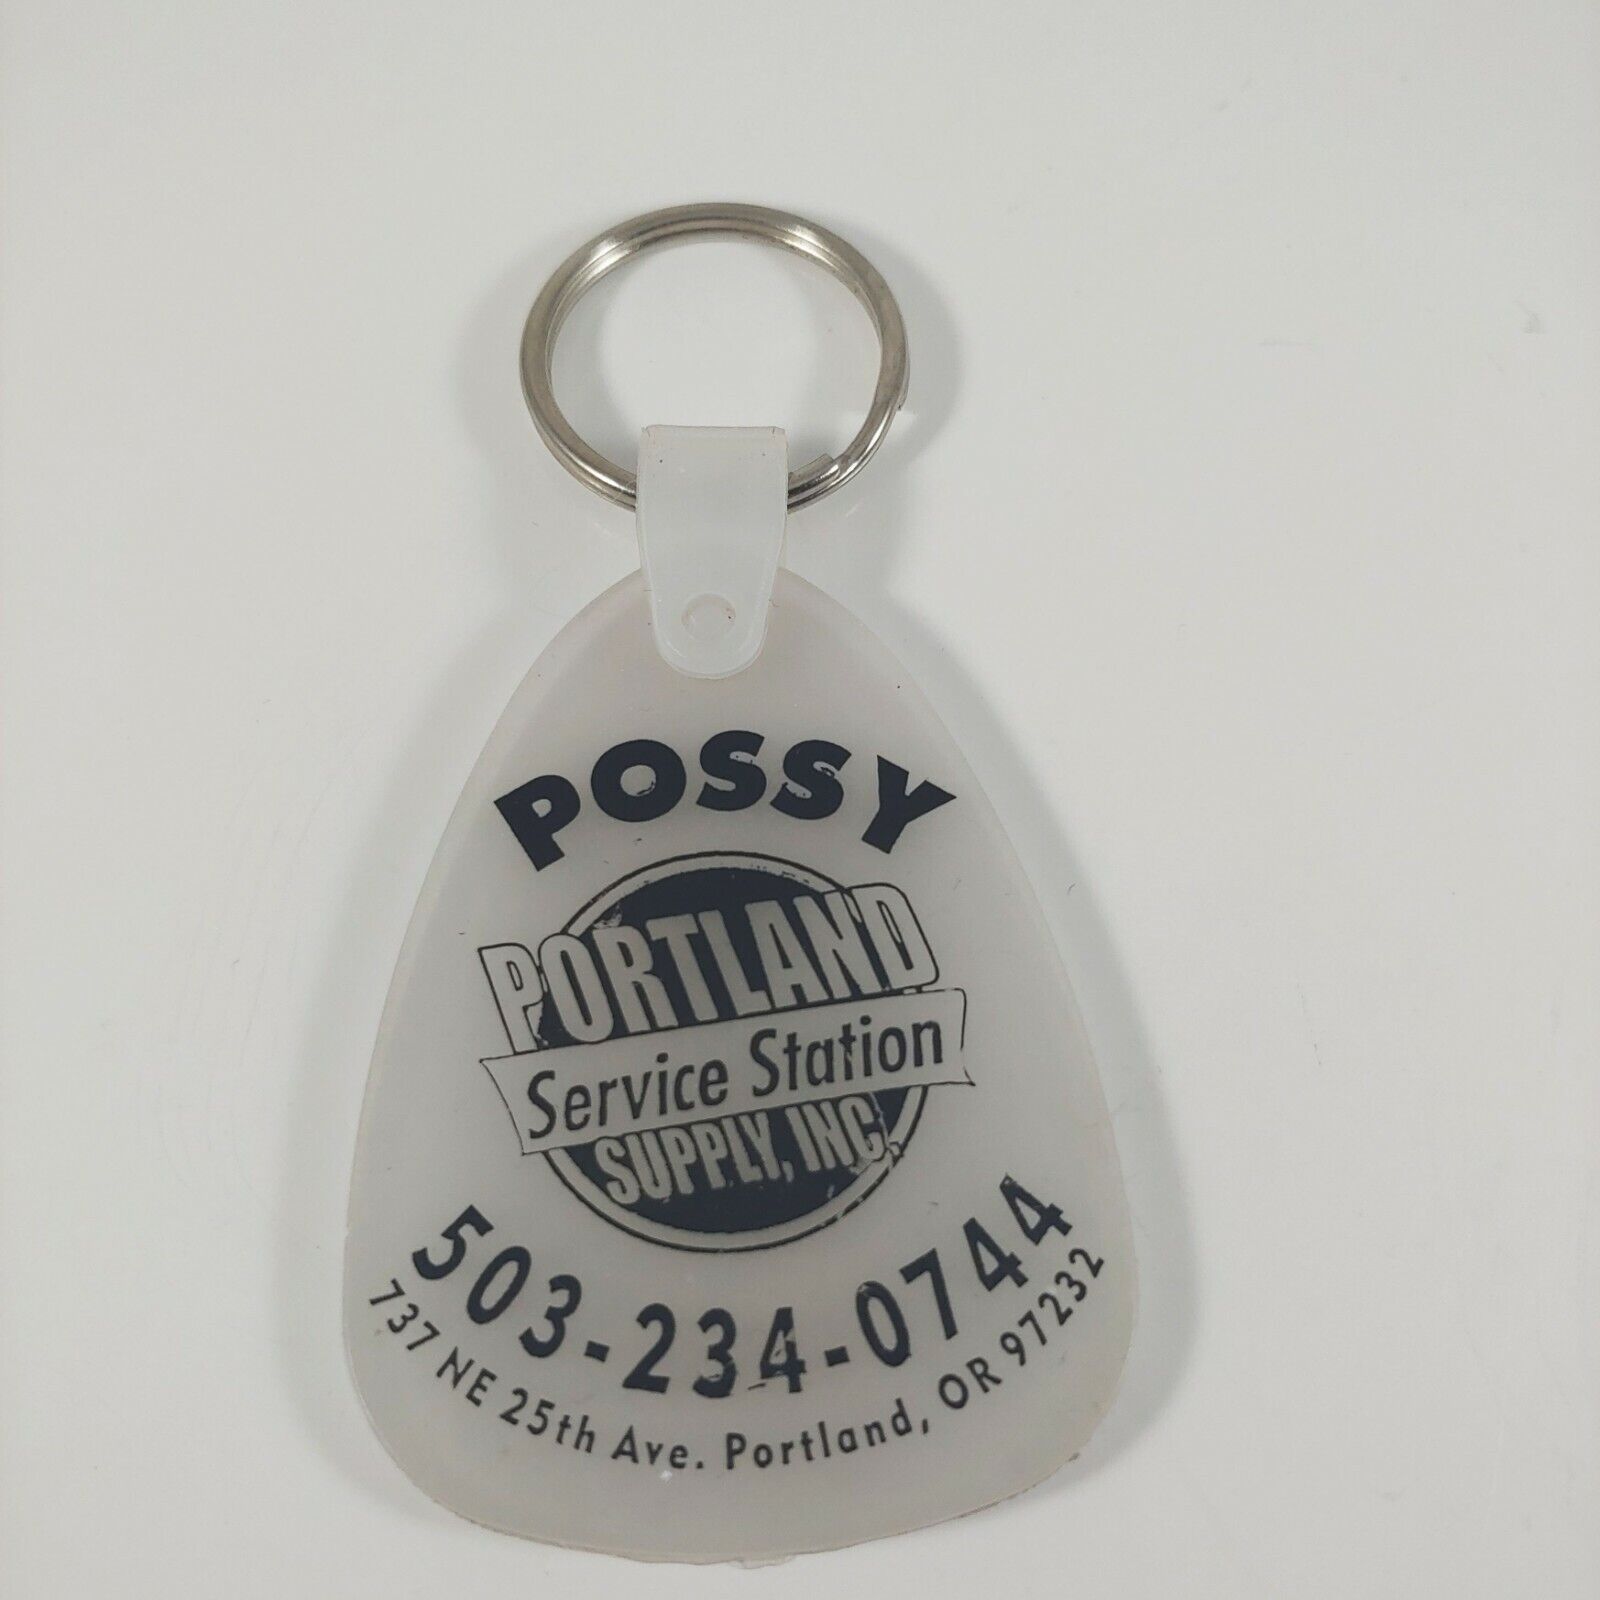 Possy Portland Service Station Supply Inc. Keychain Key Ring Oregon